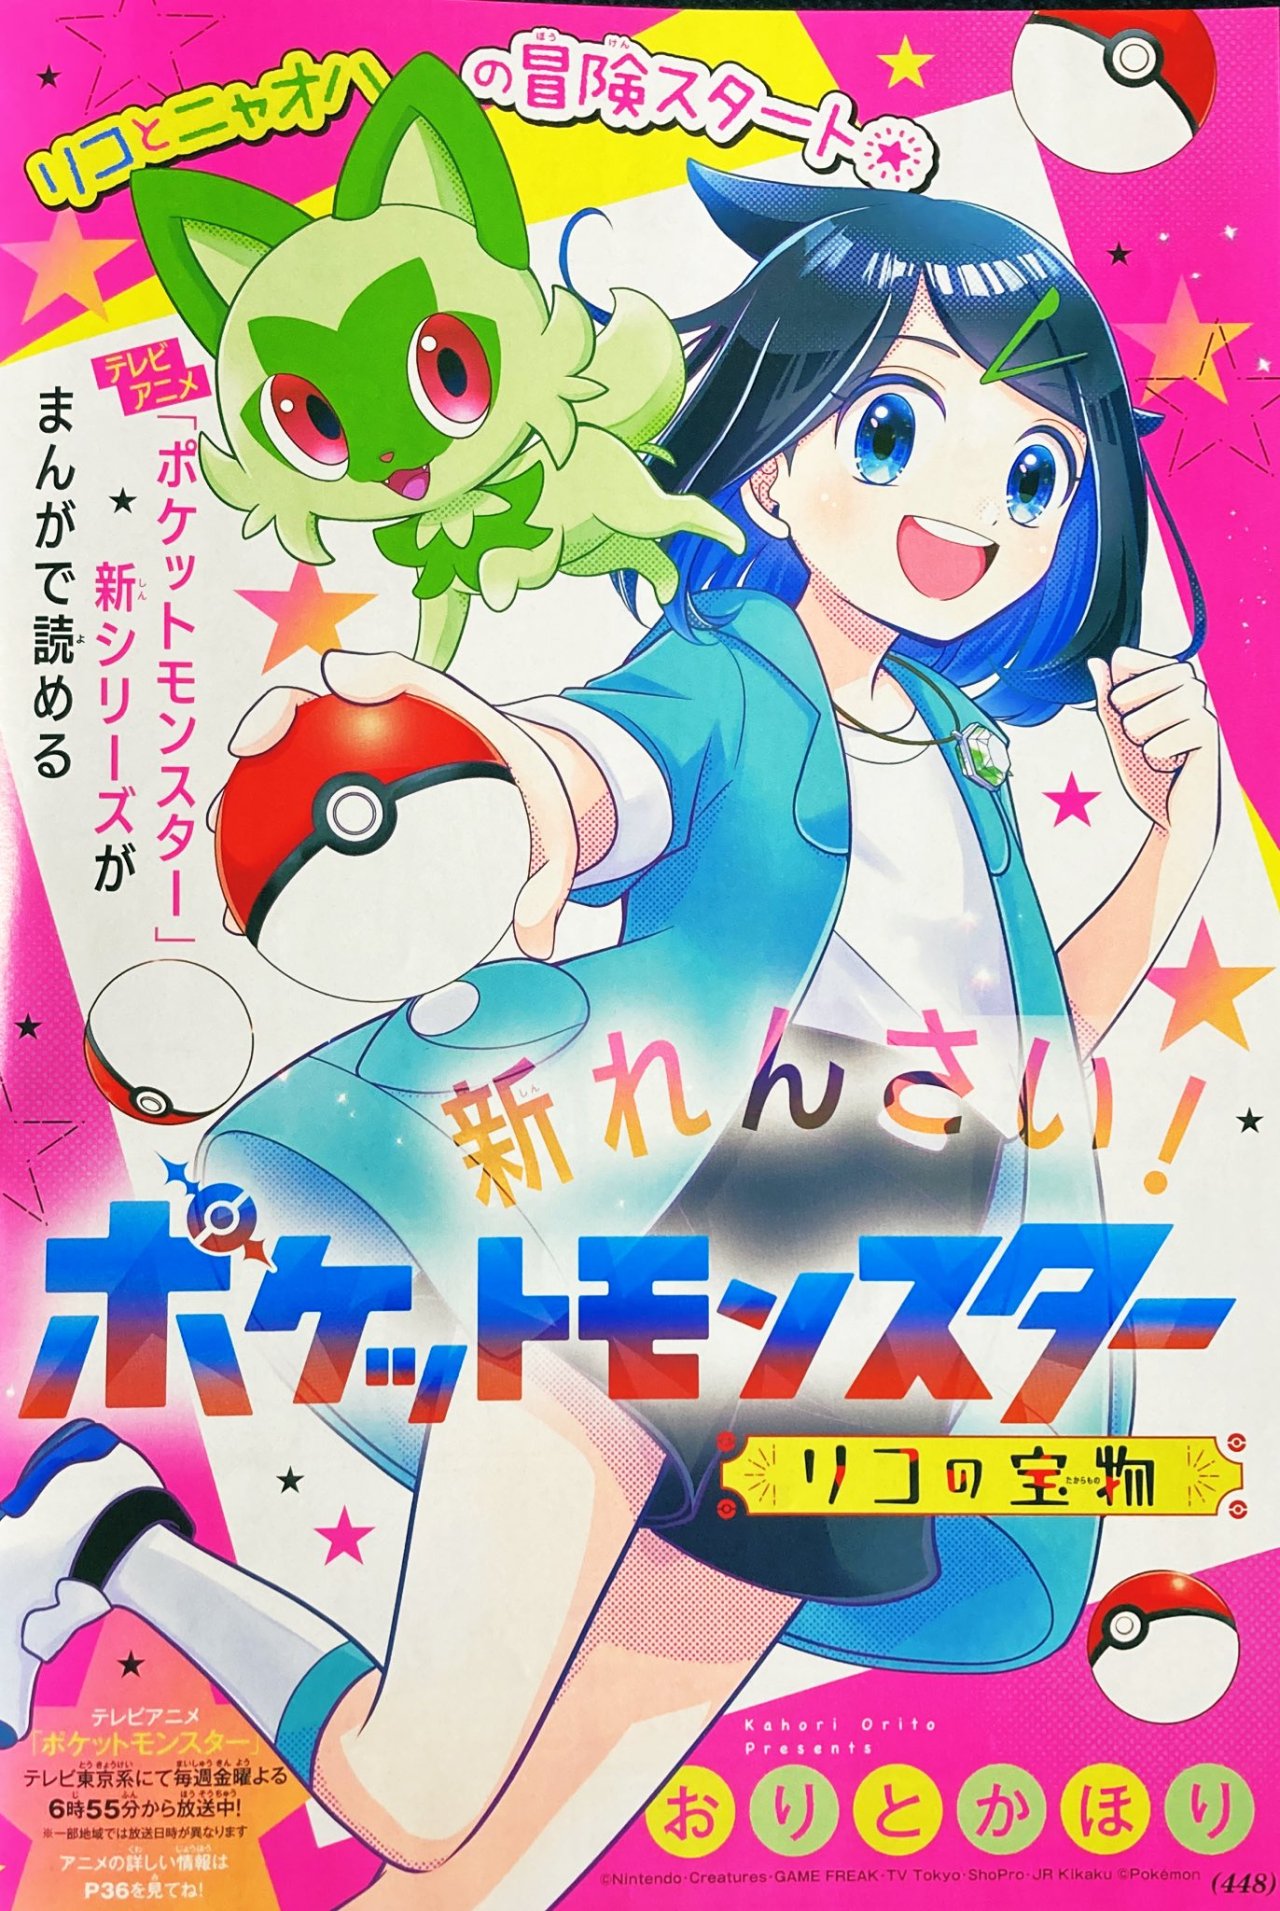 Pokémon Horizons: The Series Anime Gets Shōjo Manga in Ciao